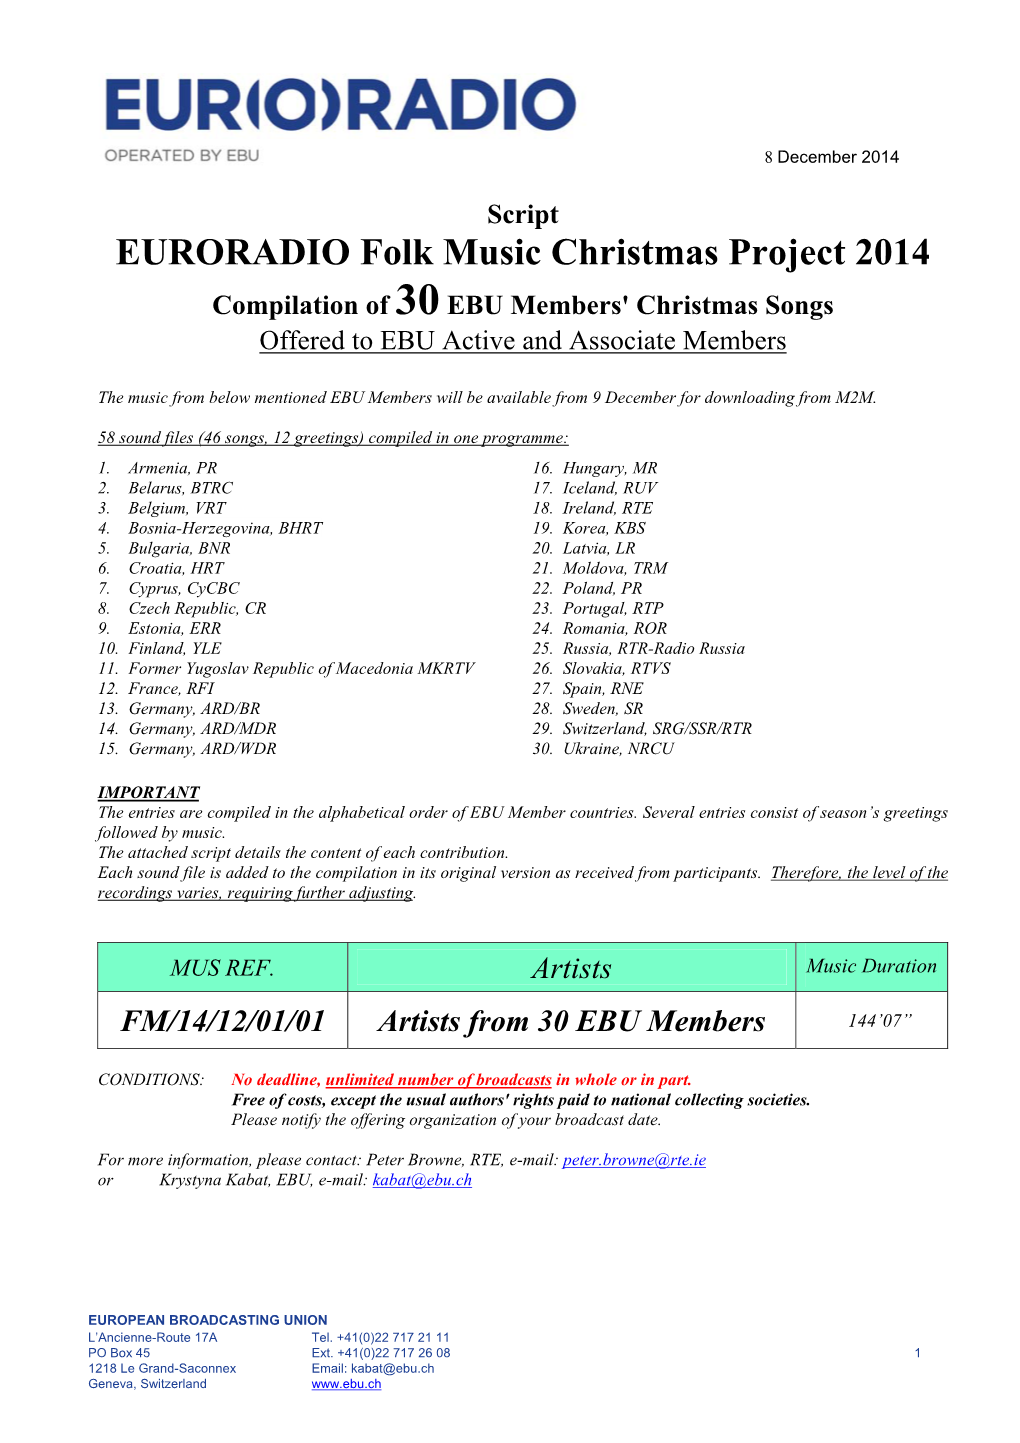 EURORADIO Folk Music Christmas Project 2014 Compilation of 30 EBU Members' Christmas Songs Offered to EBU Active and Associate Members